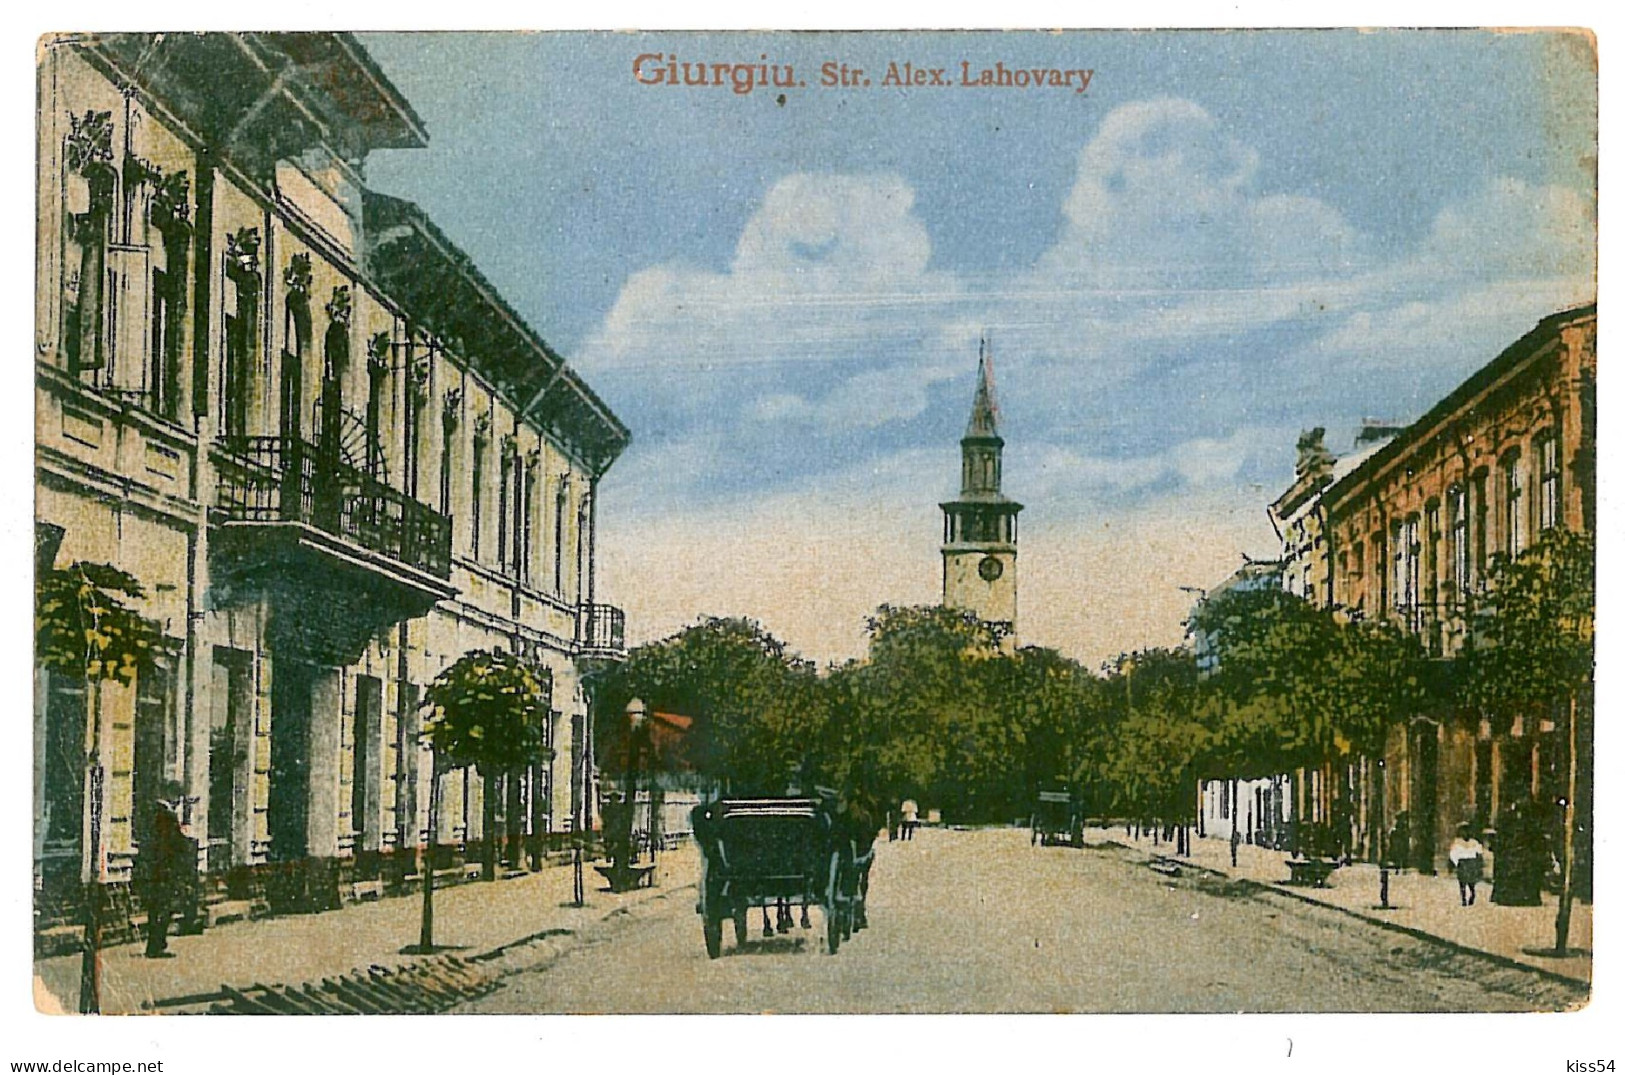 RO 38 - 2582 GIURGIU, Firetower, Street Lahovary, Romania - Old Postcard - Used - 1913 - Roumanie